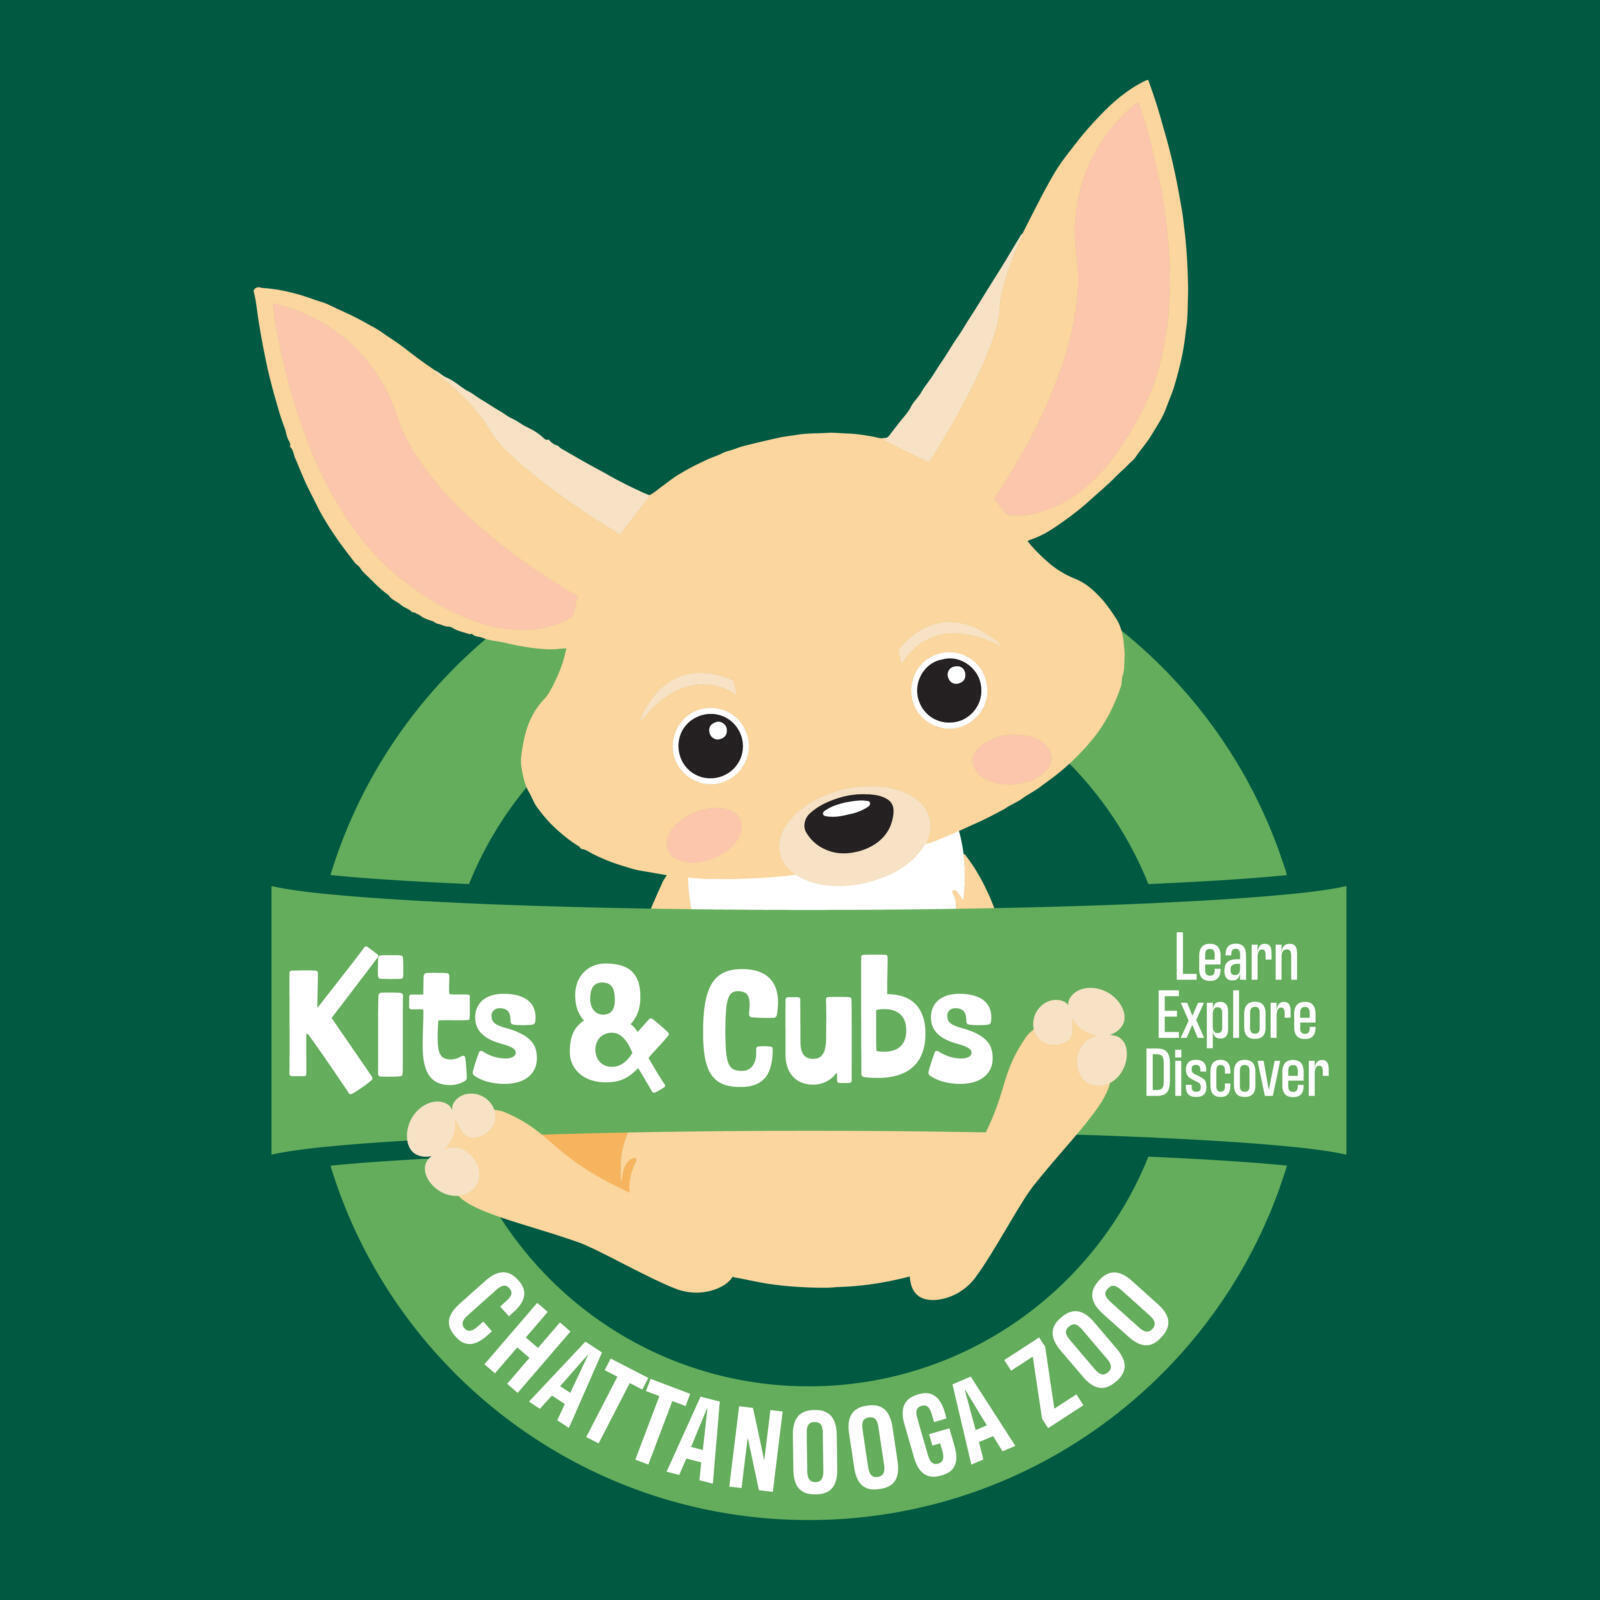 Kits and Cubs v2 01 2